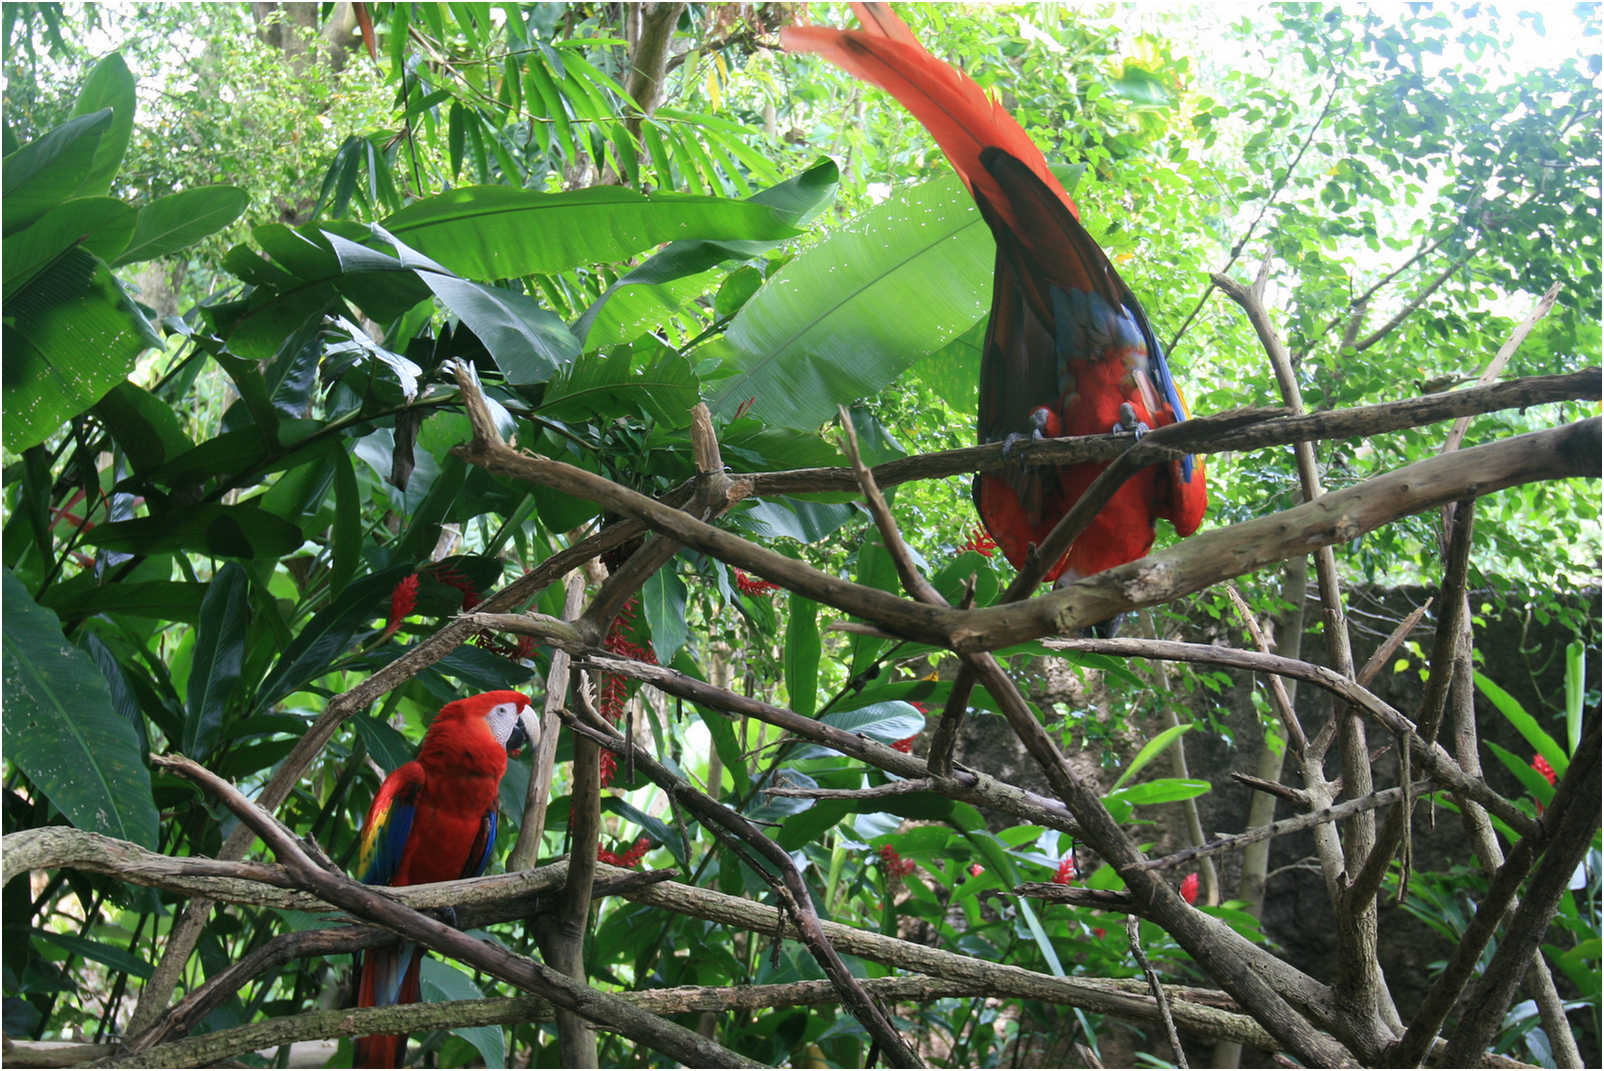 Guatemala's Walk Through Zoo